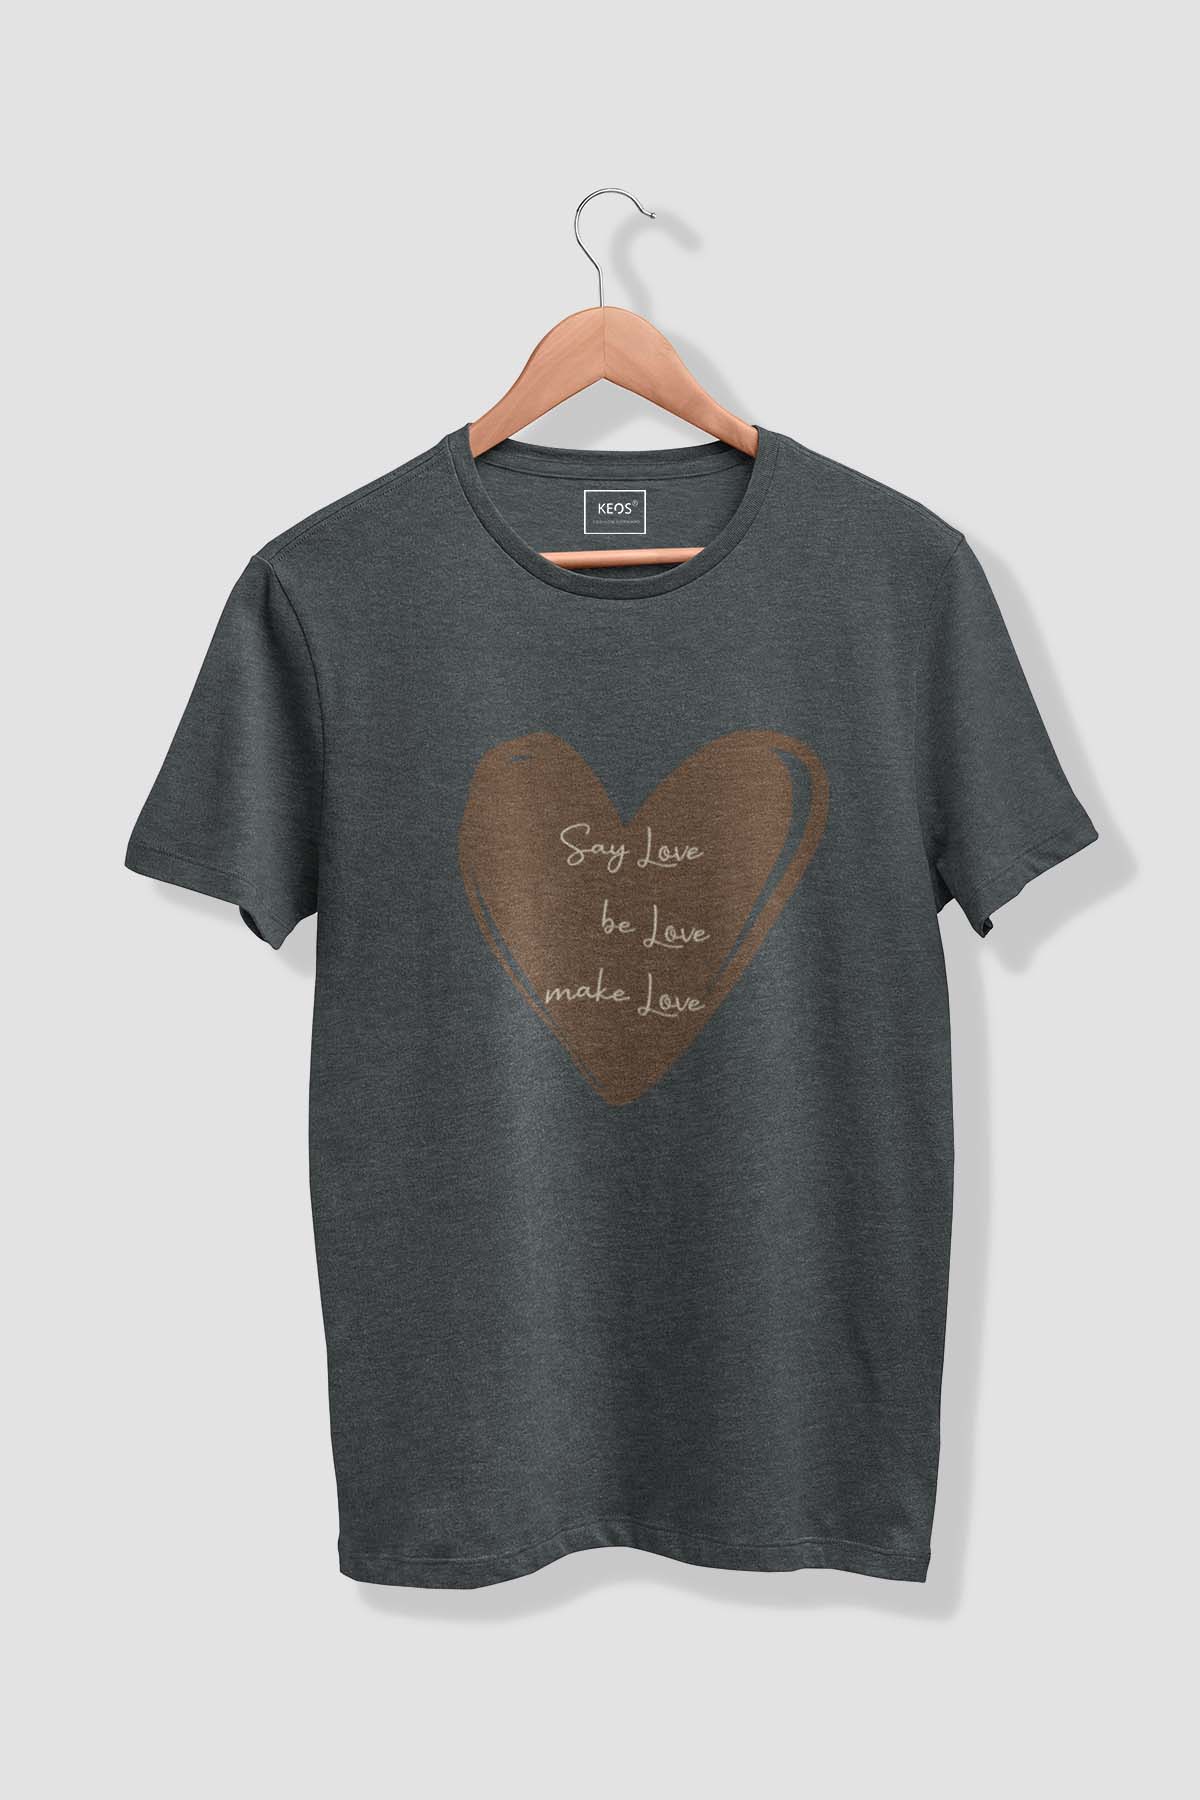 Say Love Be Love - Melange Cotton T-shirt - keos.life